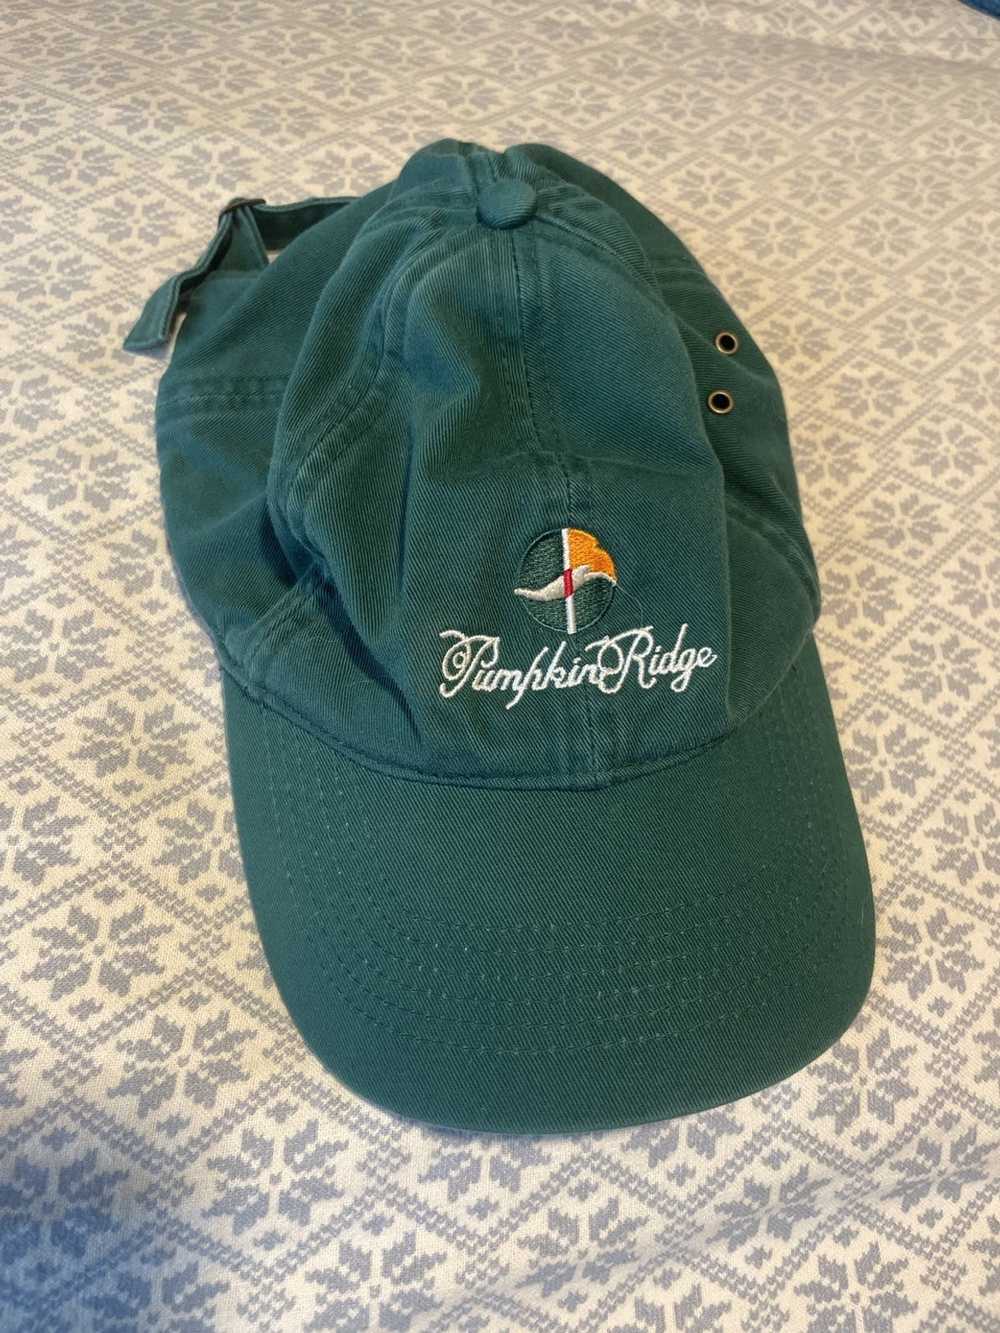 Vintage Pumpkin Ridge golf hat - image 5